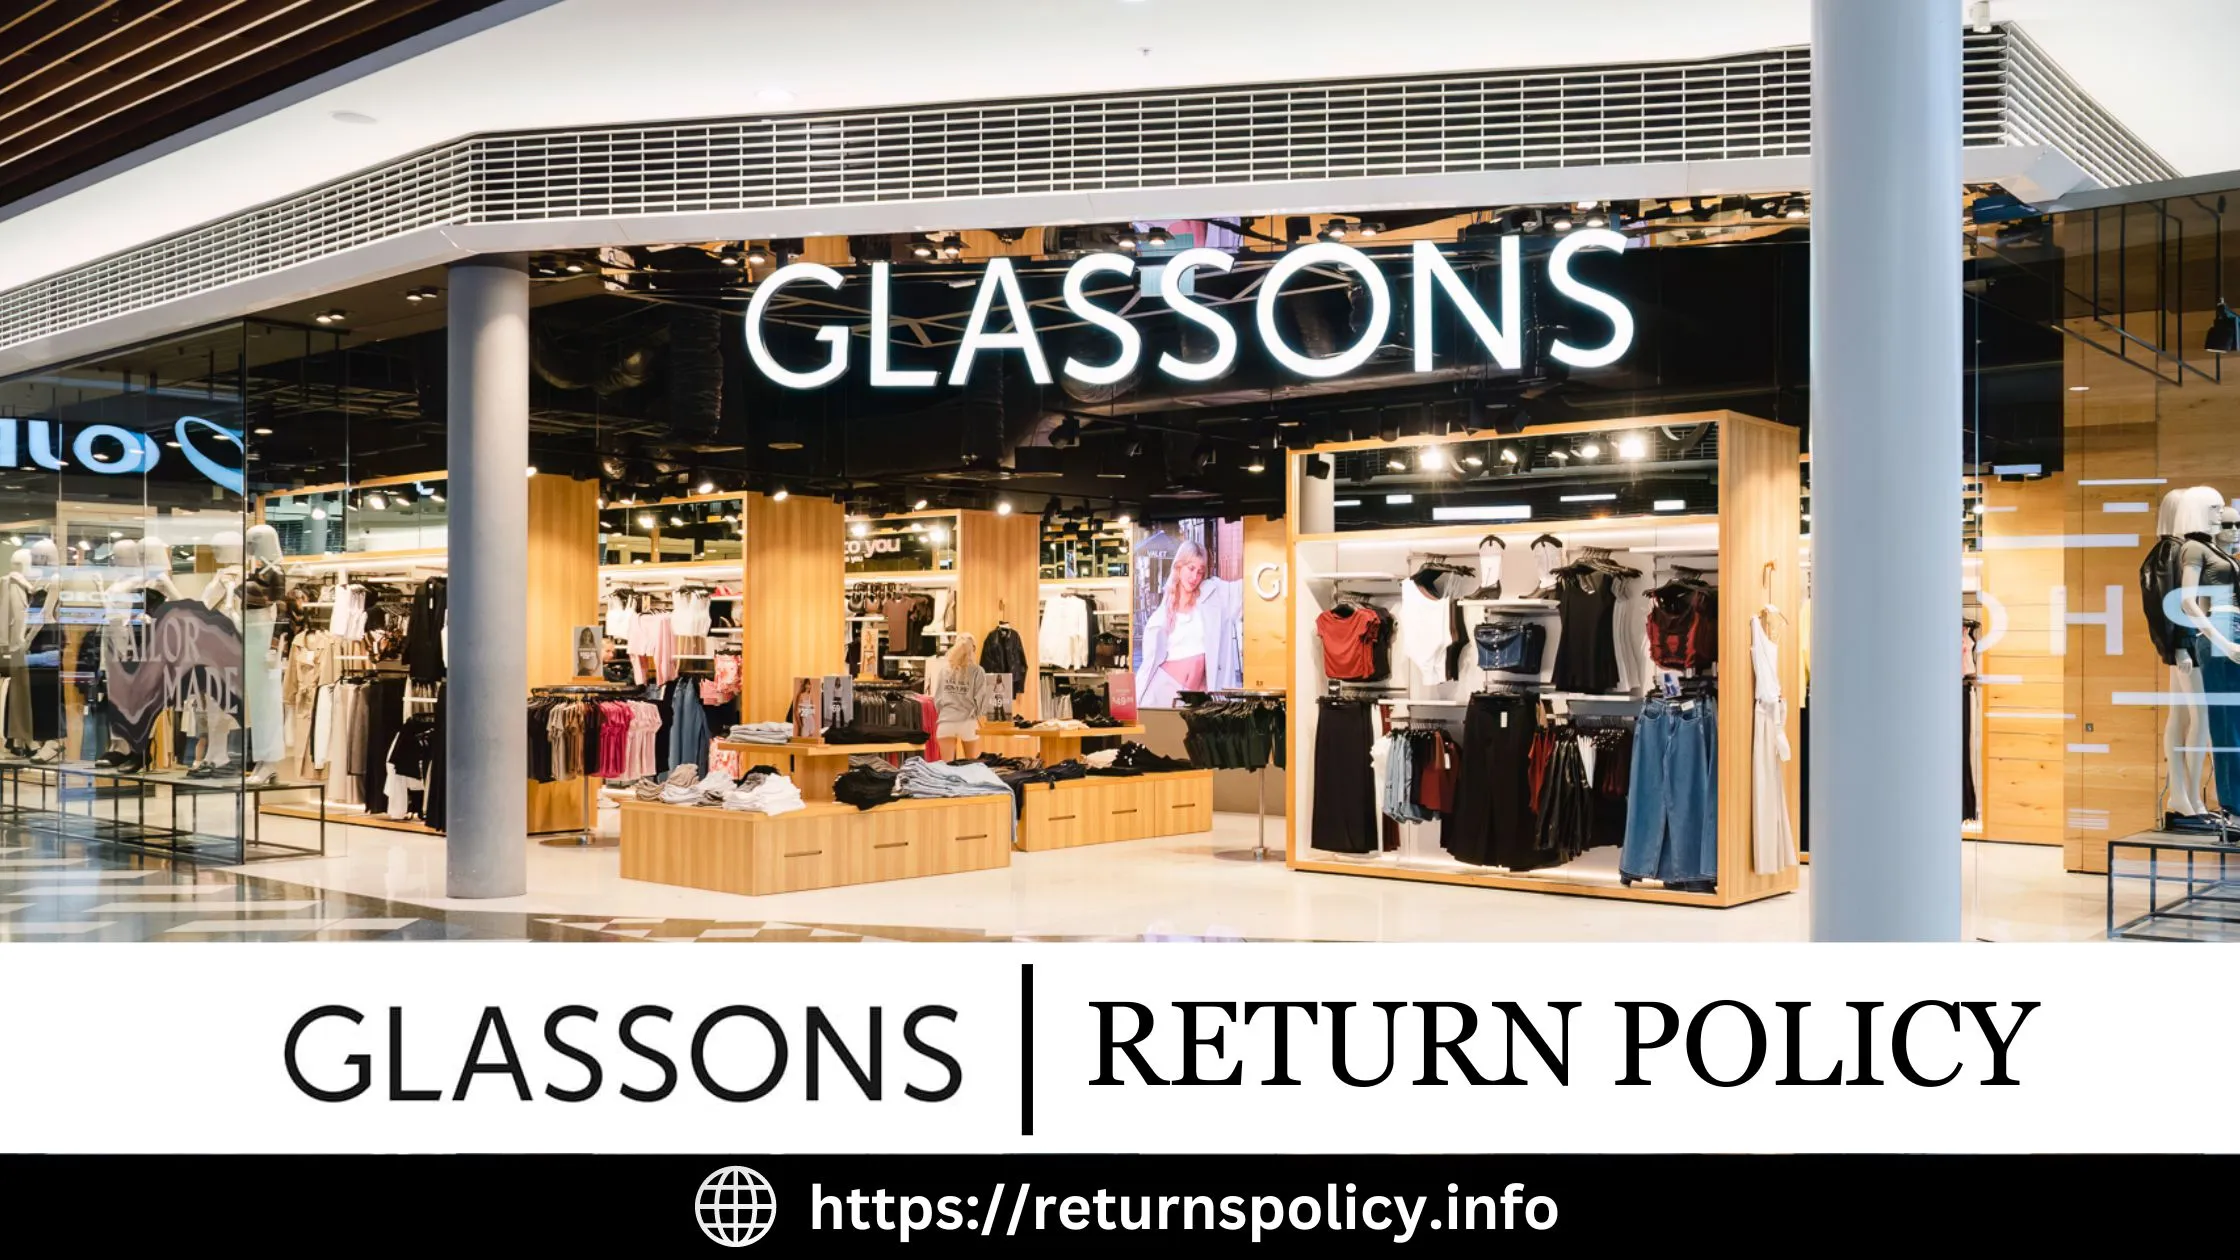 Glassons Return Policy